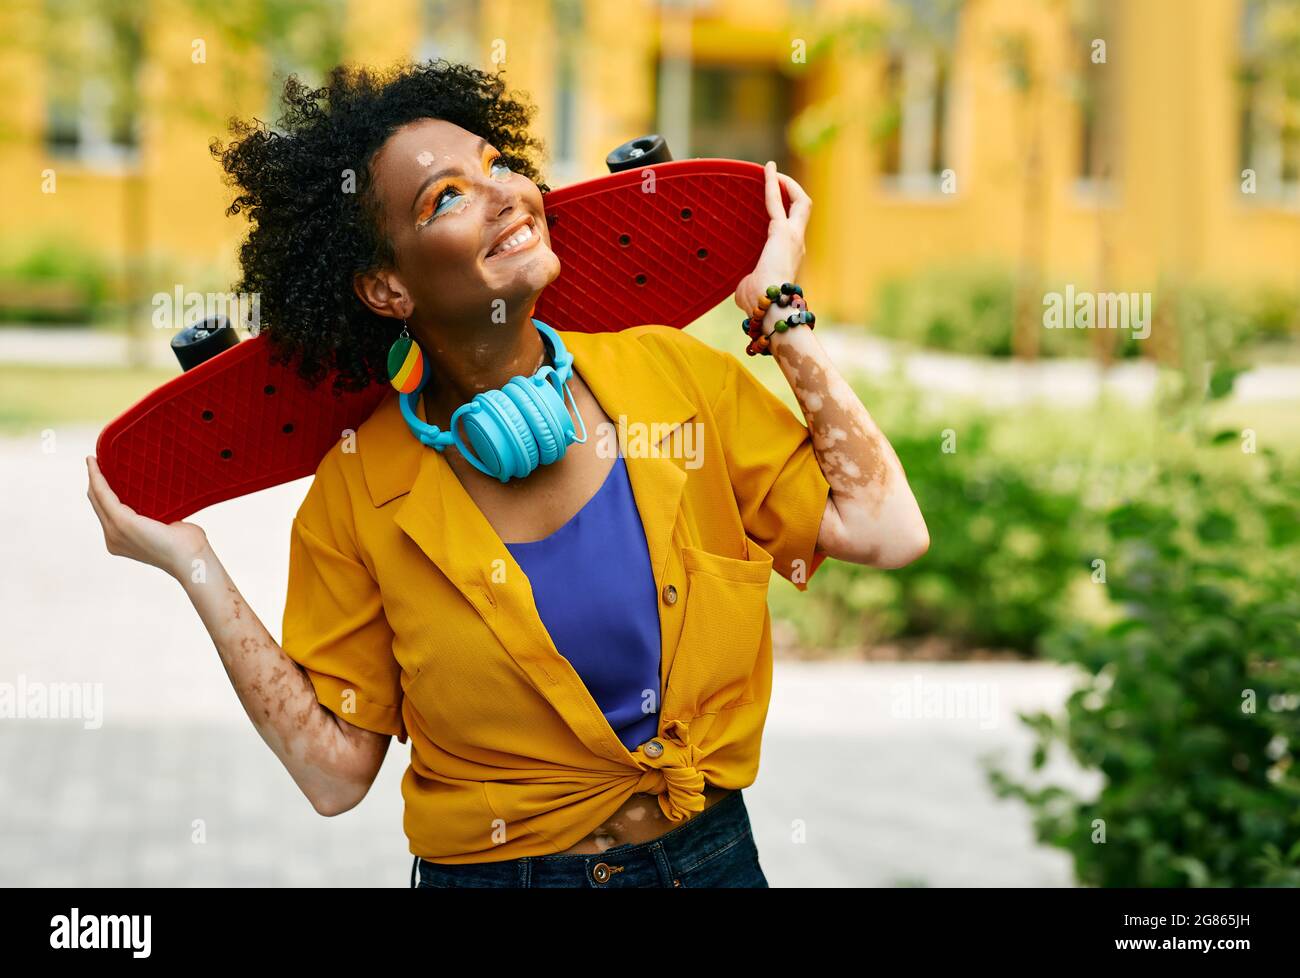 Multi-ethnic female with curly hair holds skateboard during walking modern city enjoying activity leisure summertime Stock Photo